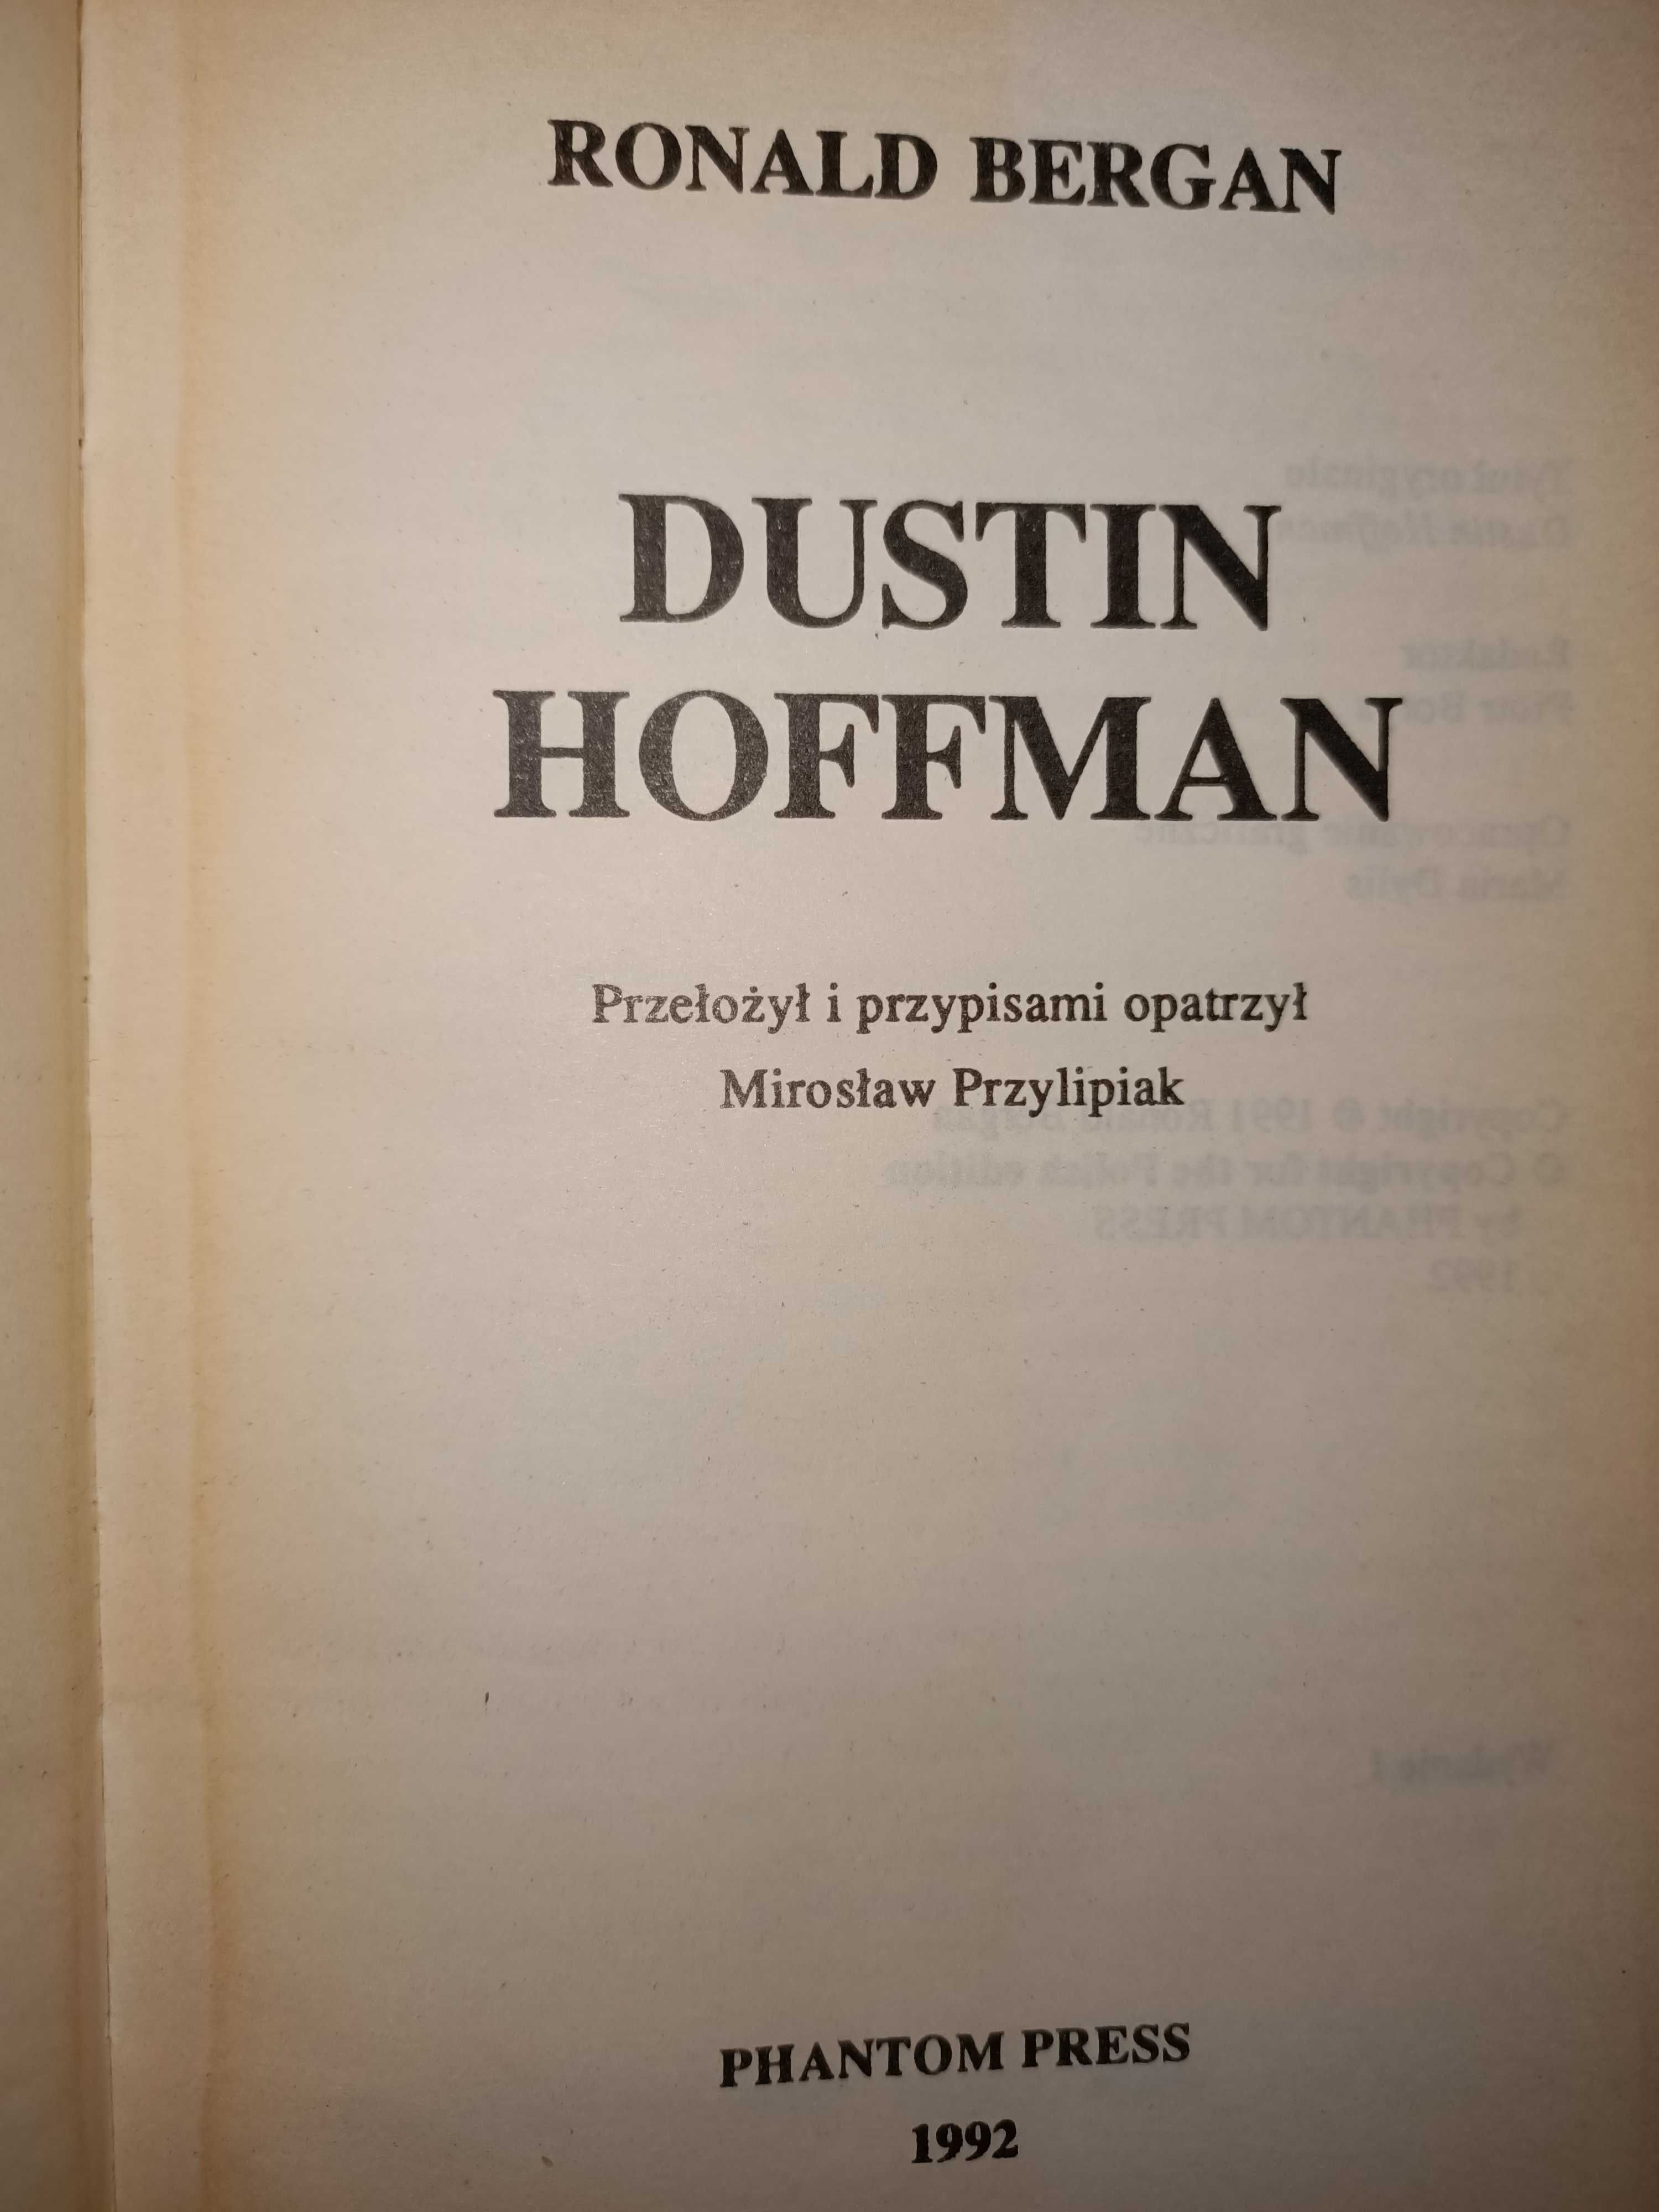 Ronald Bergan. Dustin Hoffman biografia książka